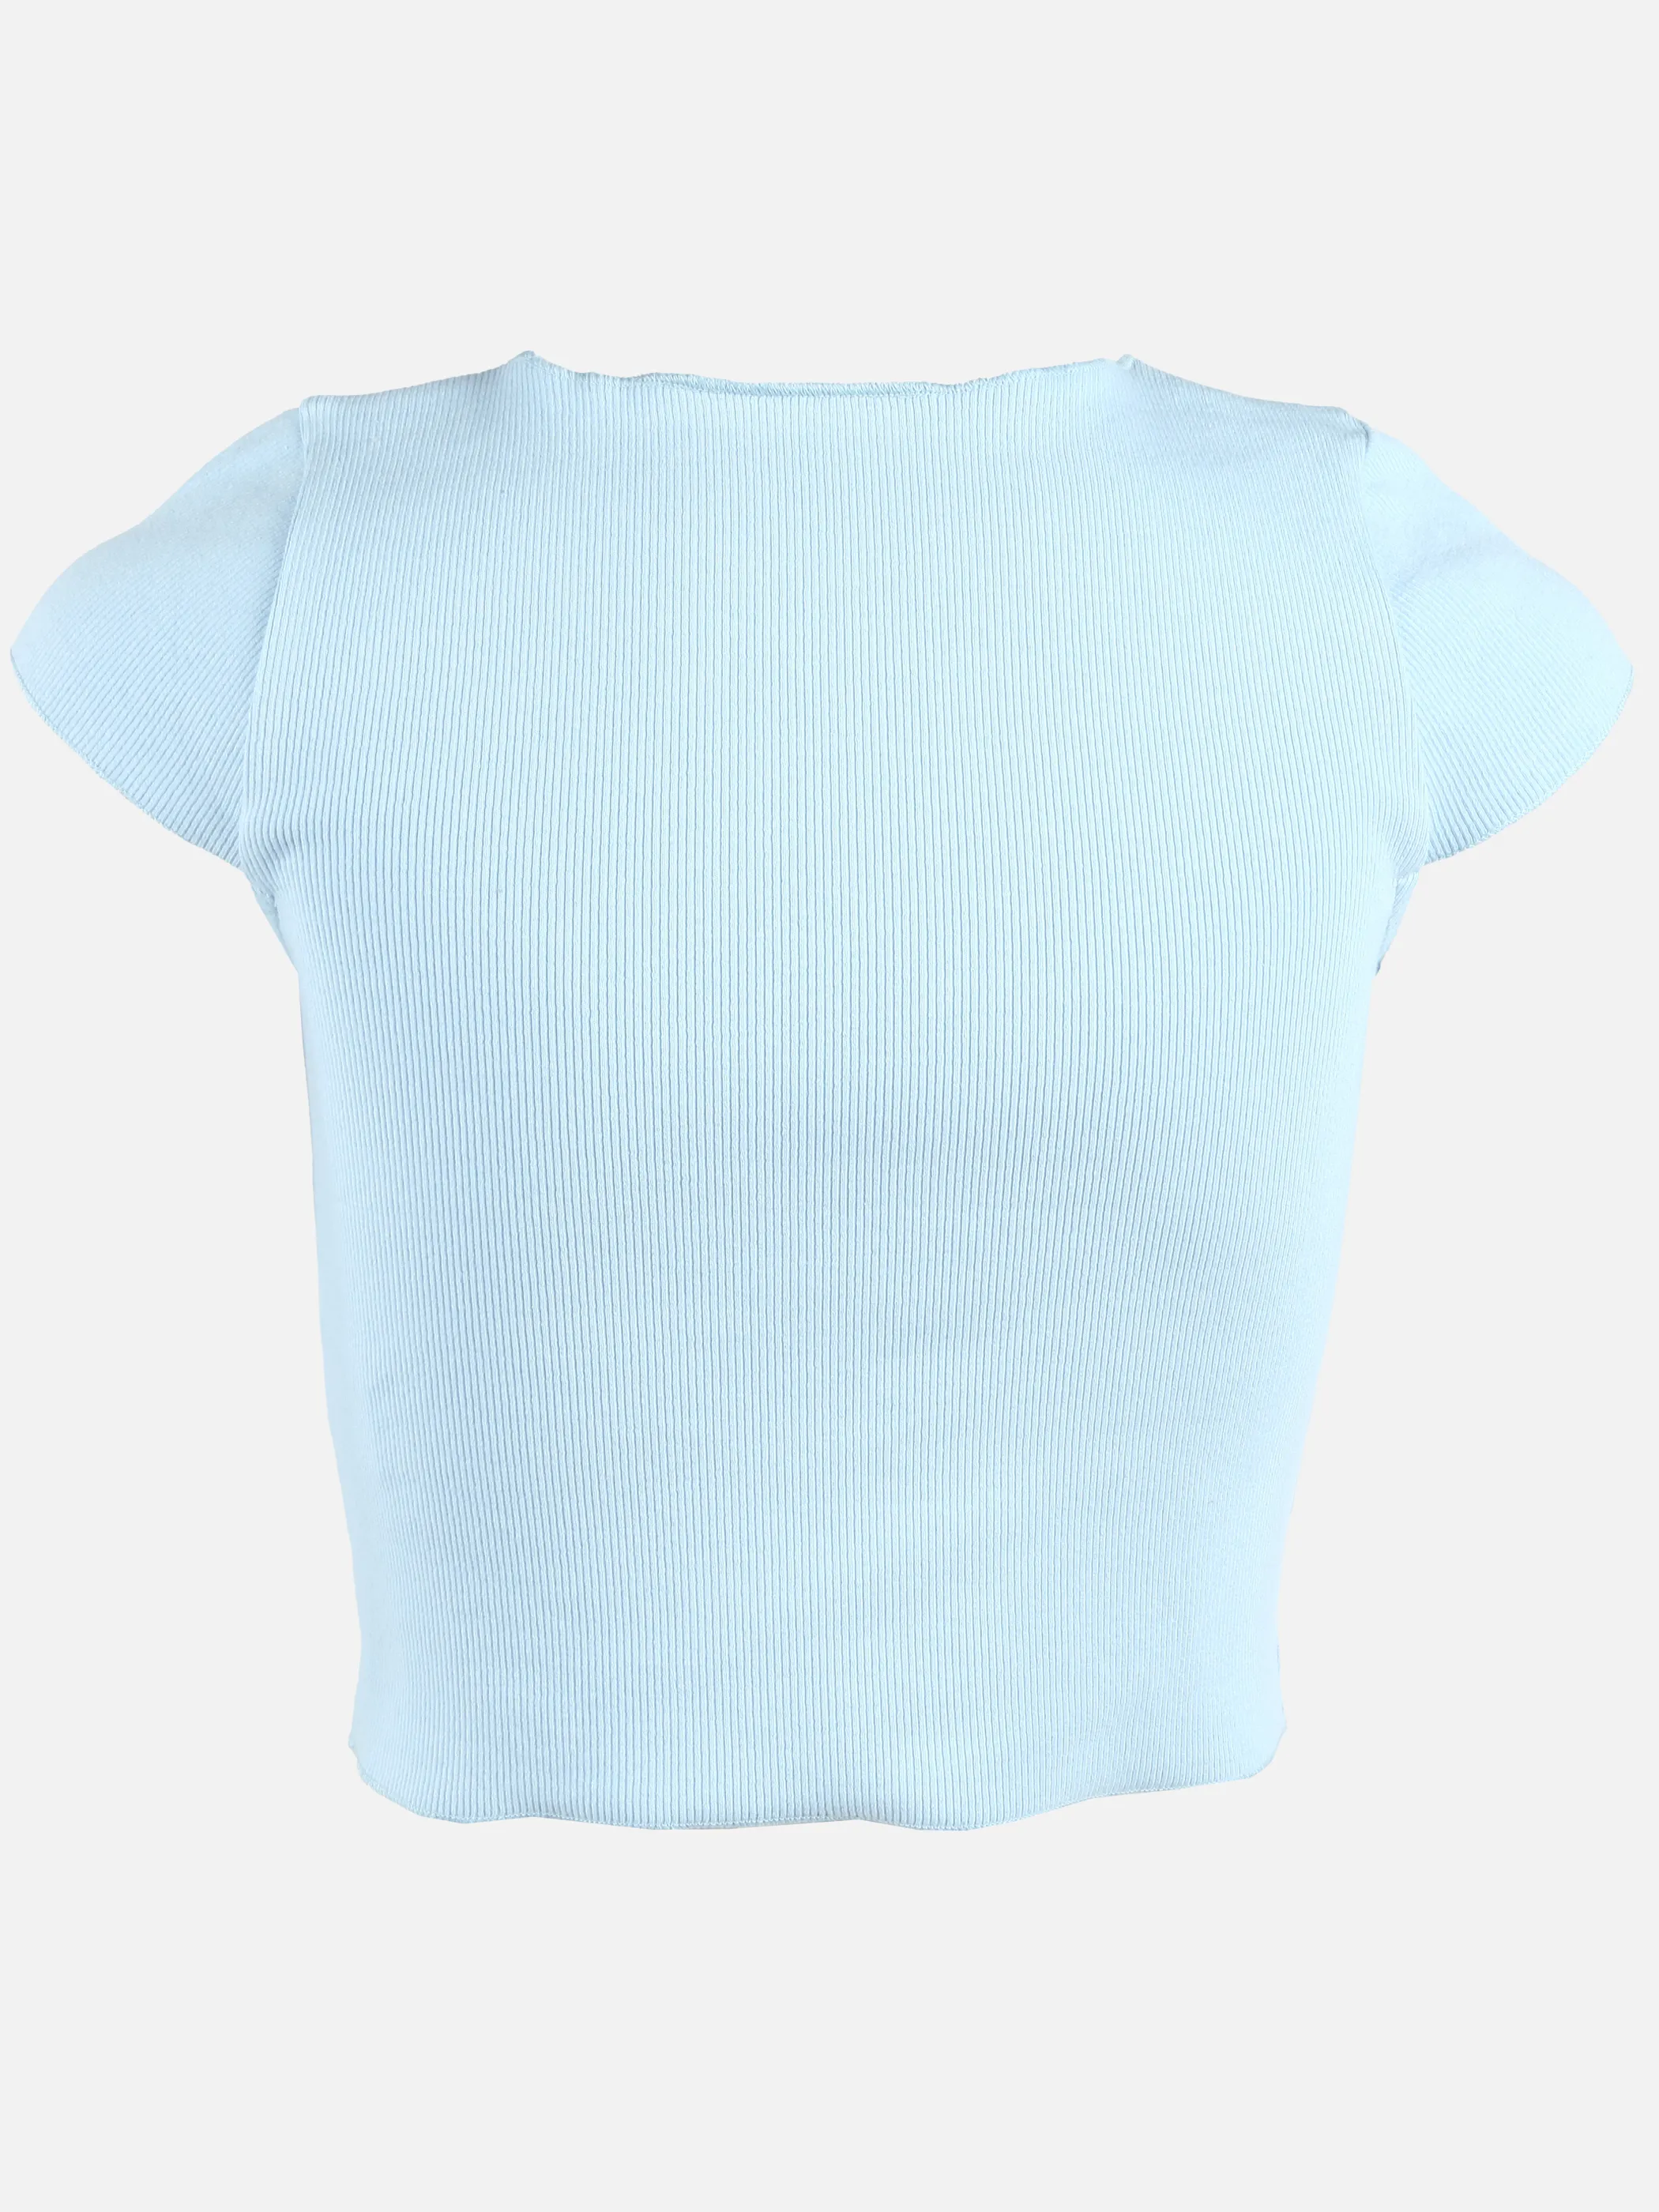 Stop + Go JM geripptes rundhals T-Shirt Blau 890971 HELLBLAU 2